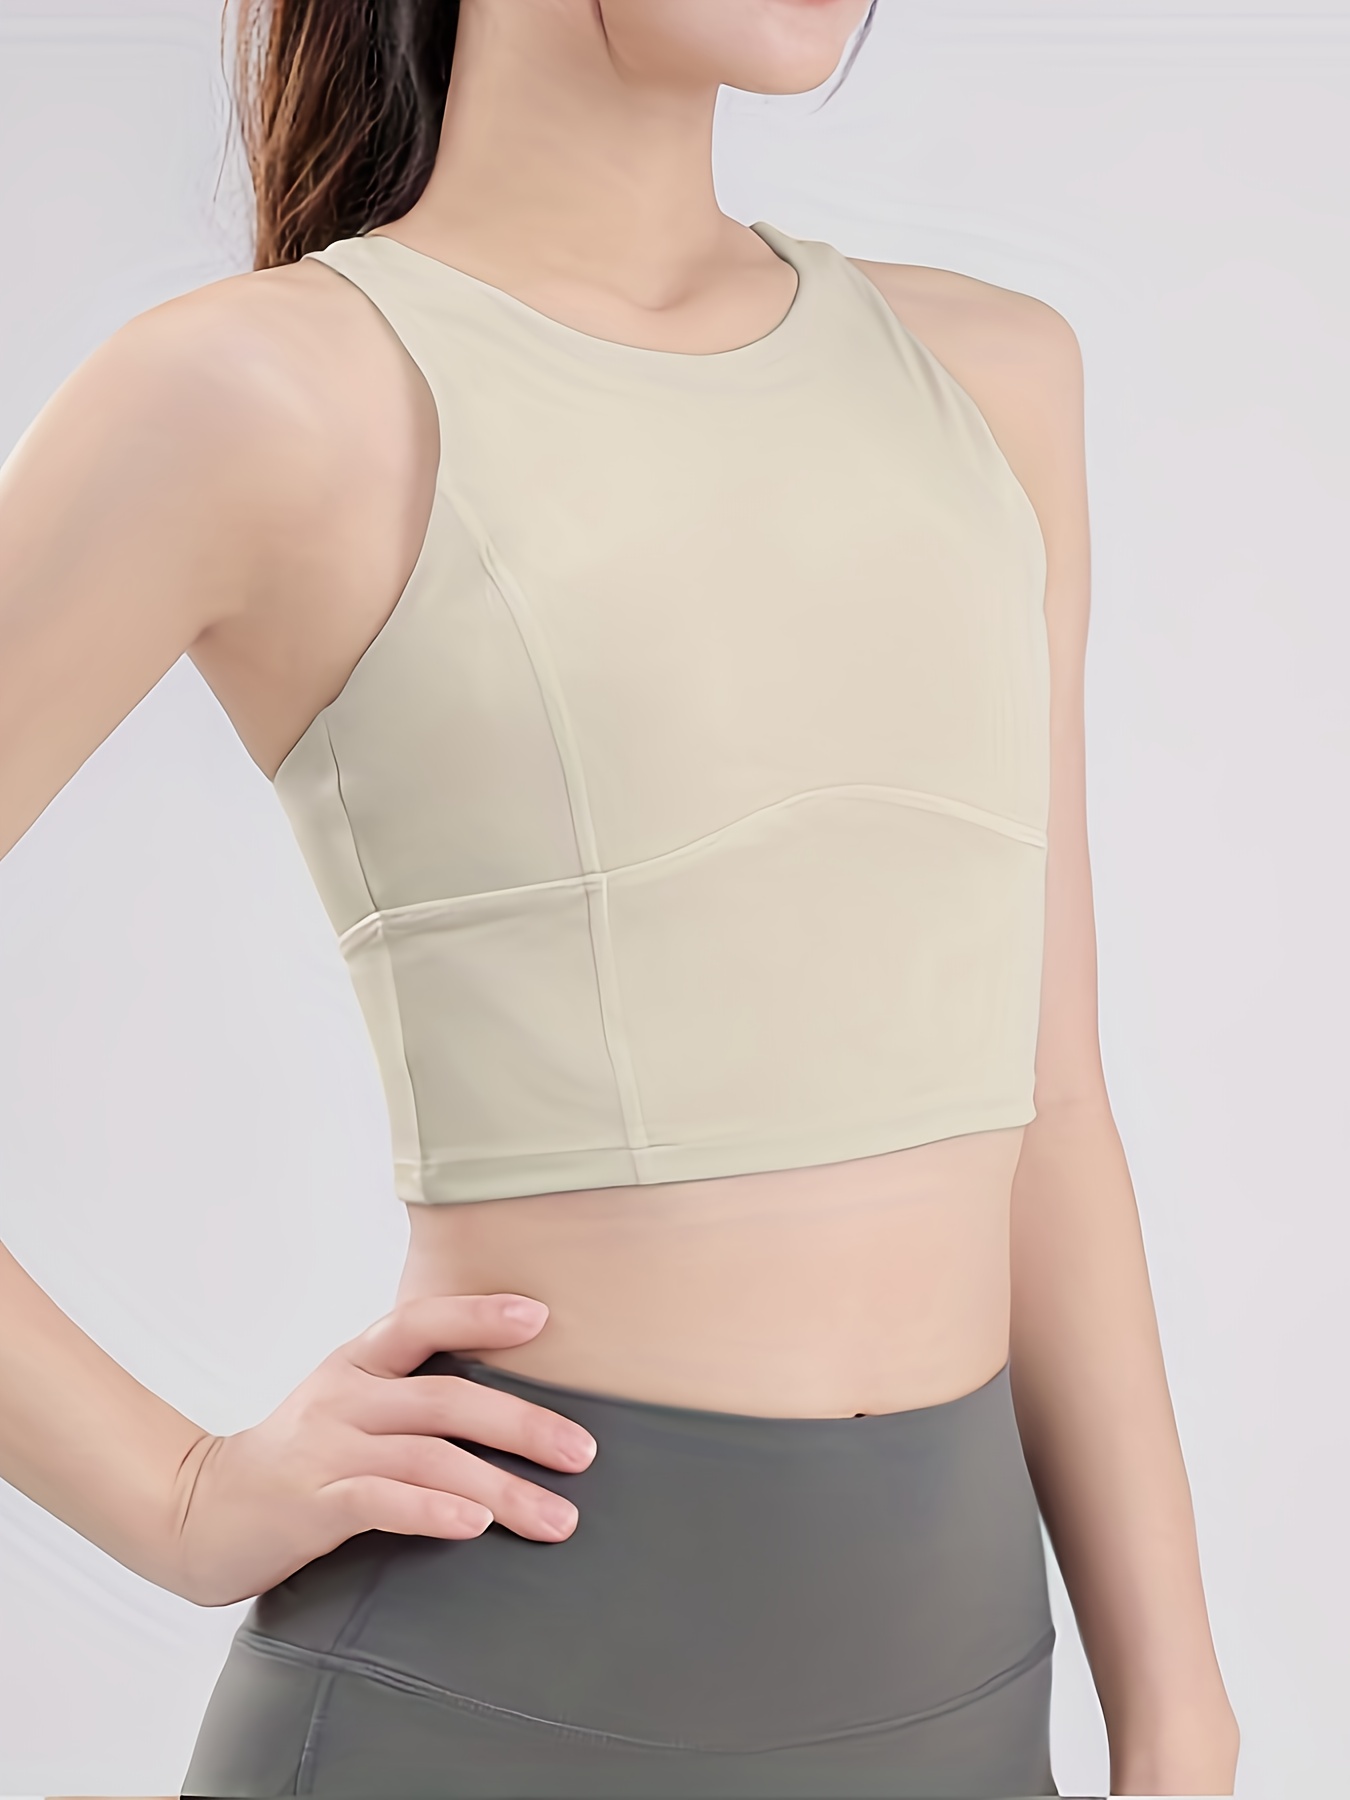 Women Breathable Chest Breast Binder Side Buckle Short Vest Tops Chest  Binder Underwear Tank Tops Wireless Chest Wrap Bandage